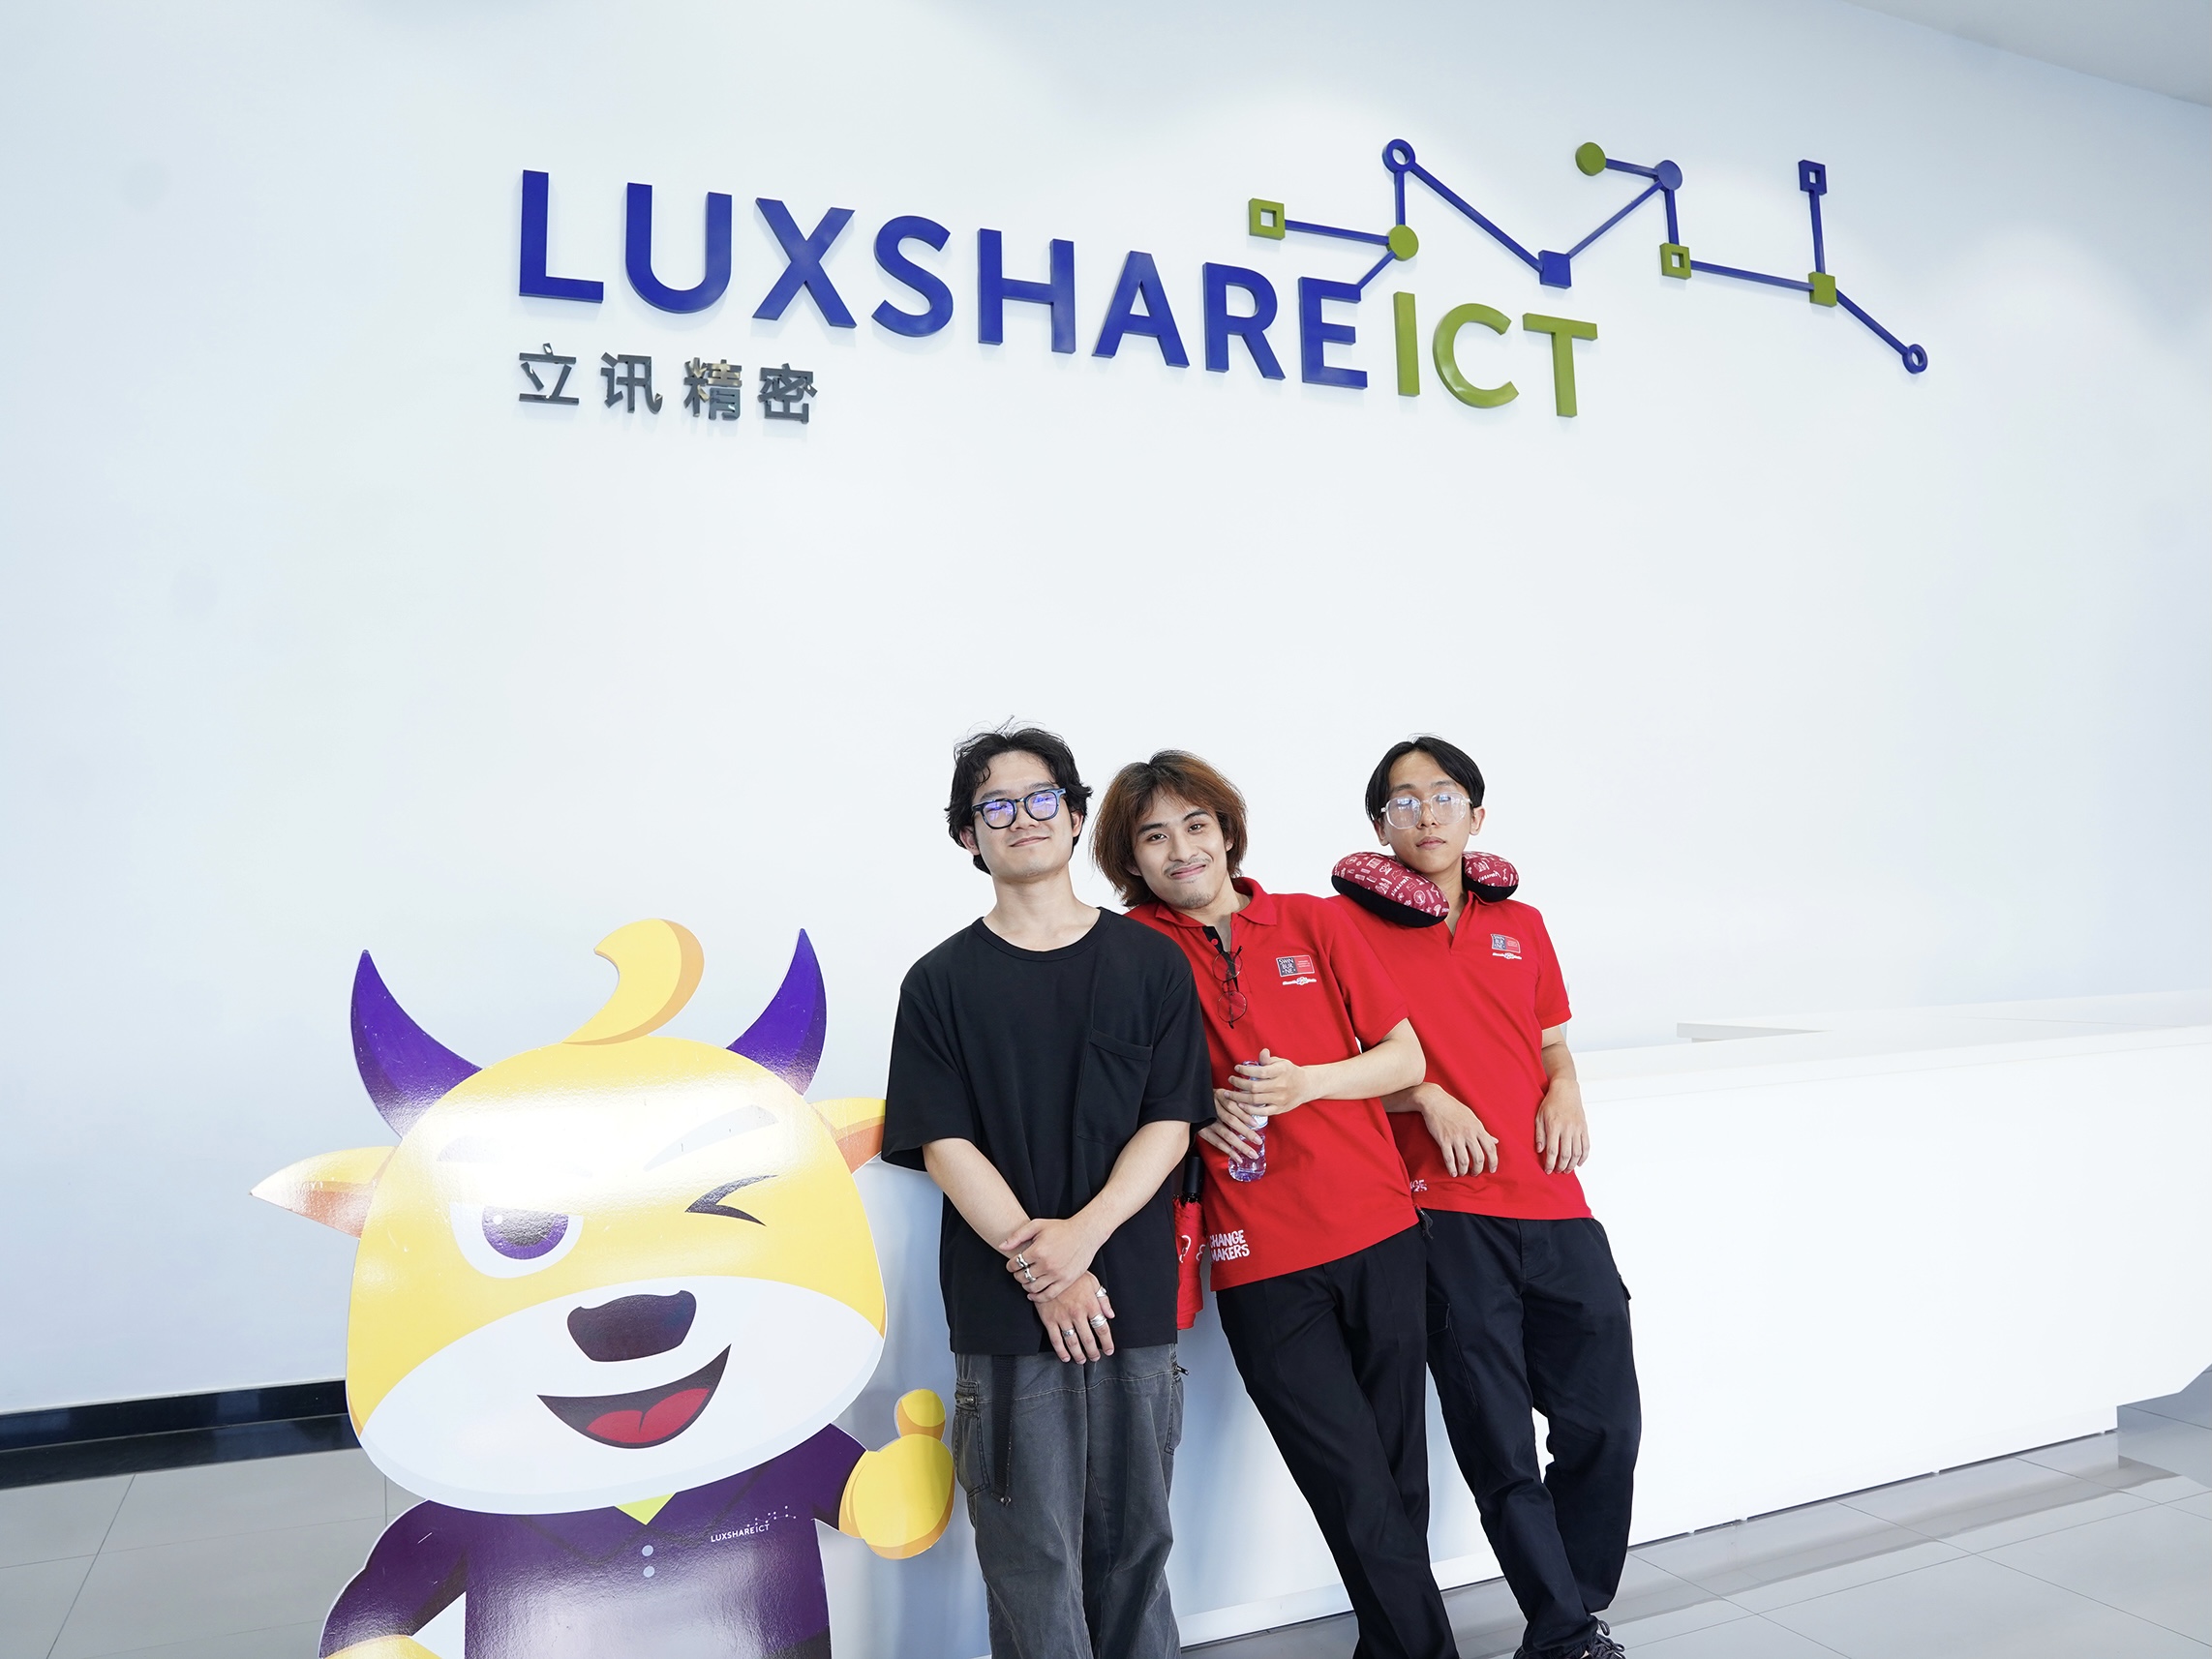 Sinh viên Swinburne Việt Nam tham quan Luxshare-ICT